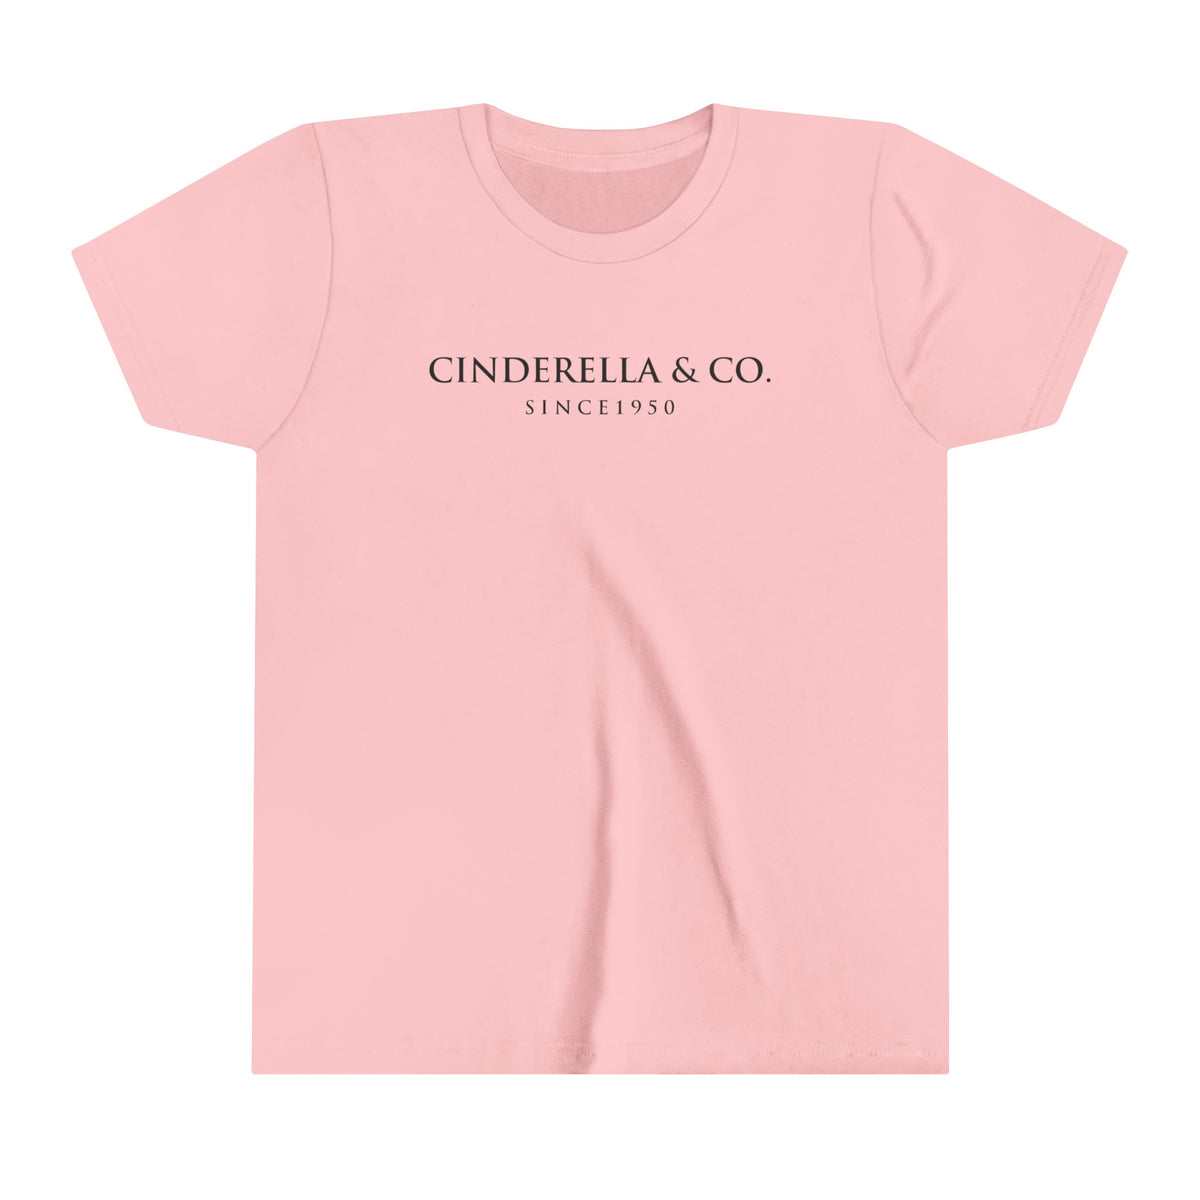 Cinderella & Co Bella Canvas Youth Short Sleeve Tee